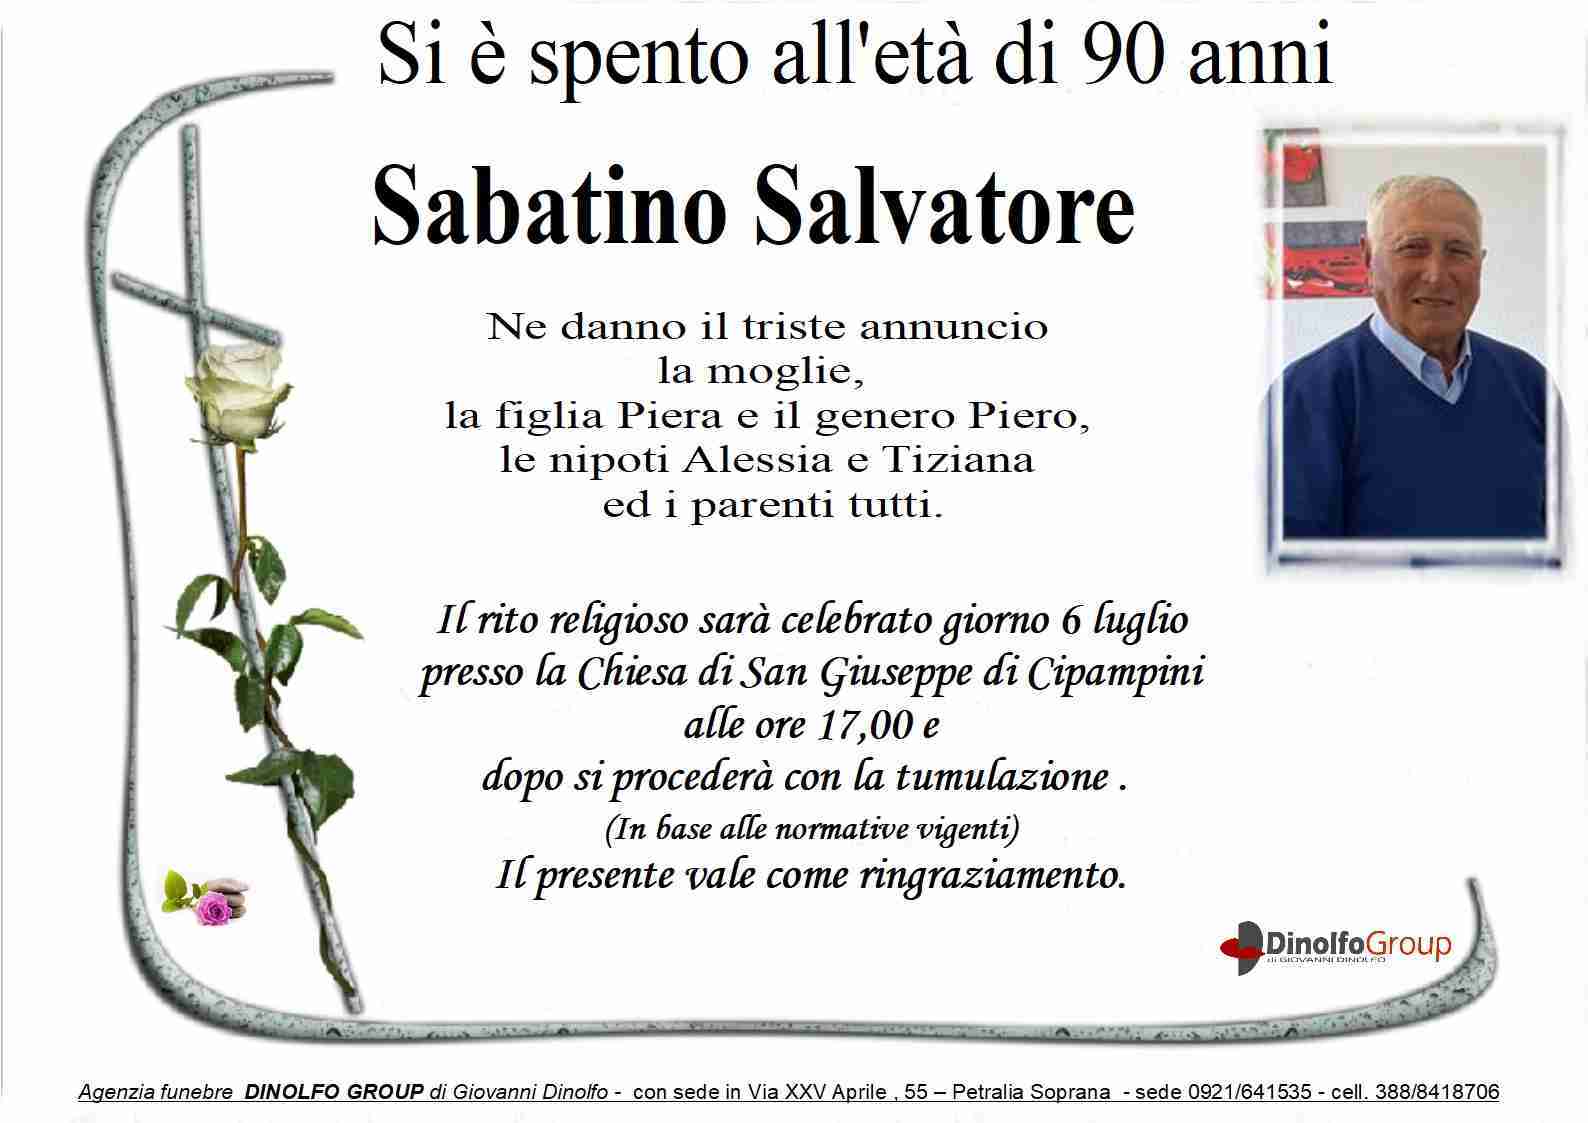 Salvatore Sabatino